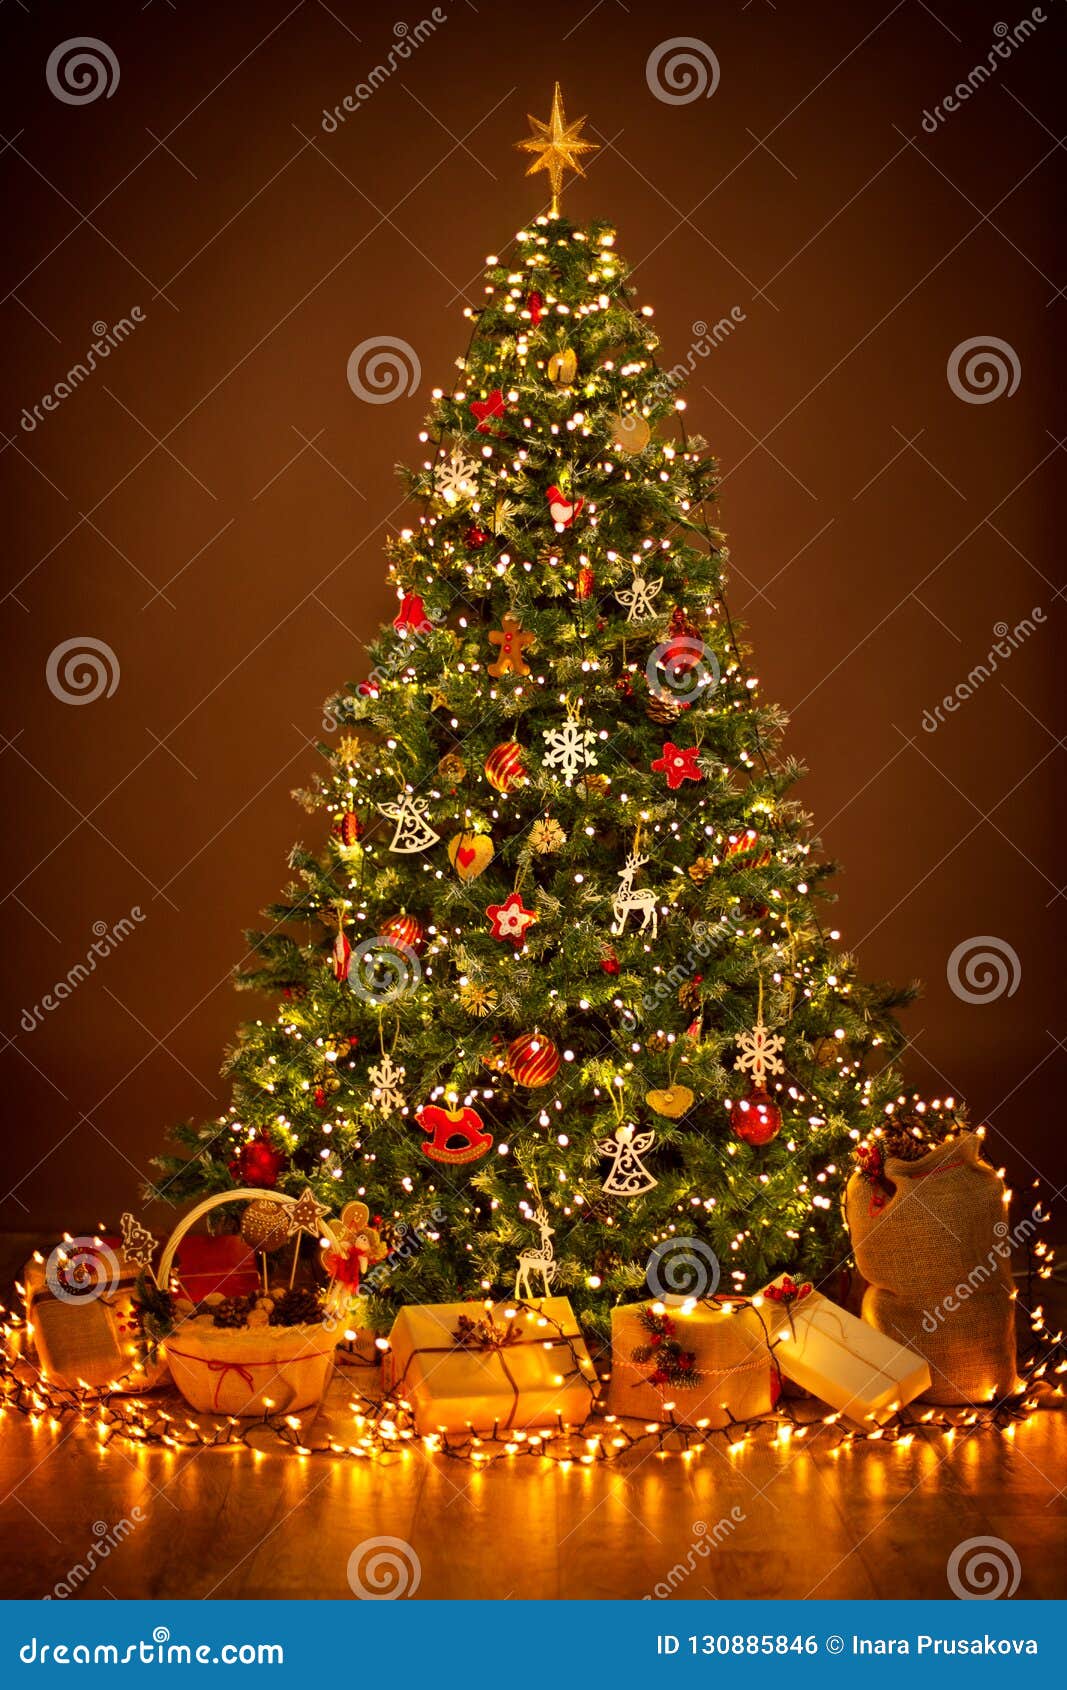 christmas tree lighting in night, xmas decorations hanging